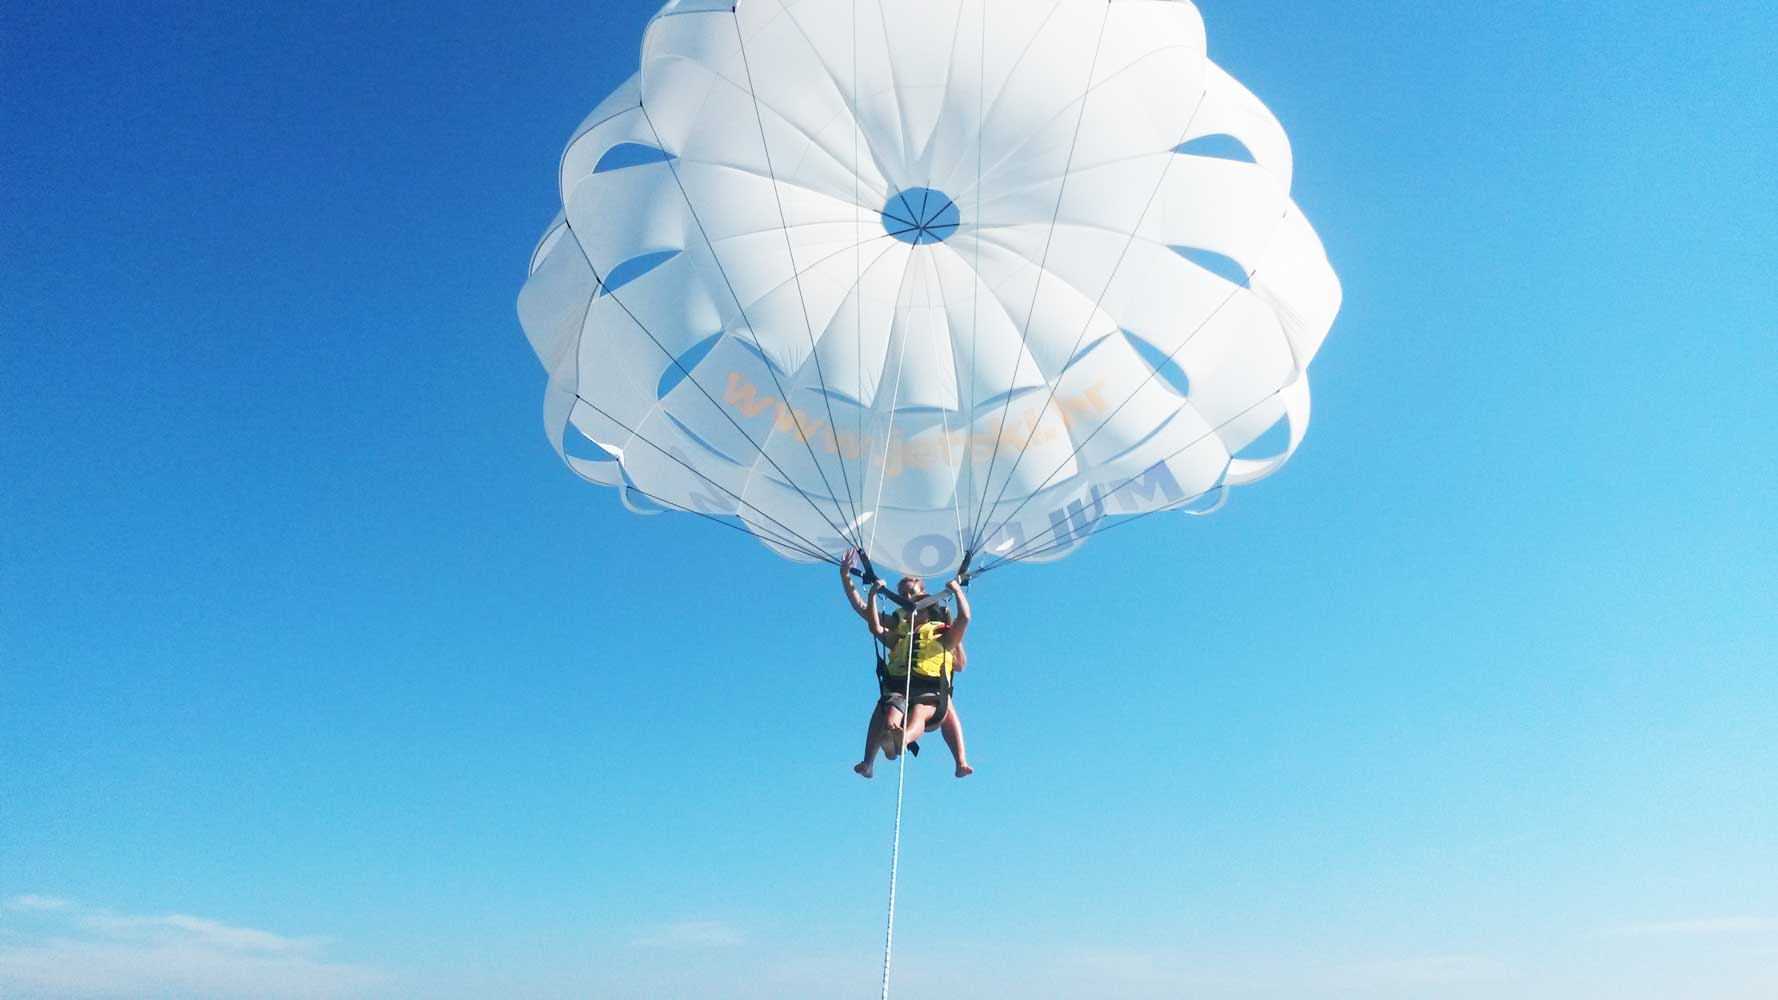 Parasailing - Water sports - Parachute rides on water